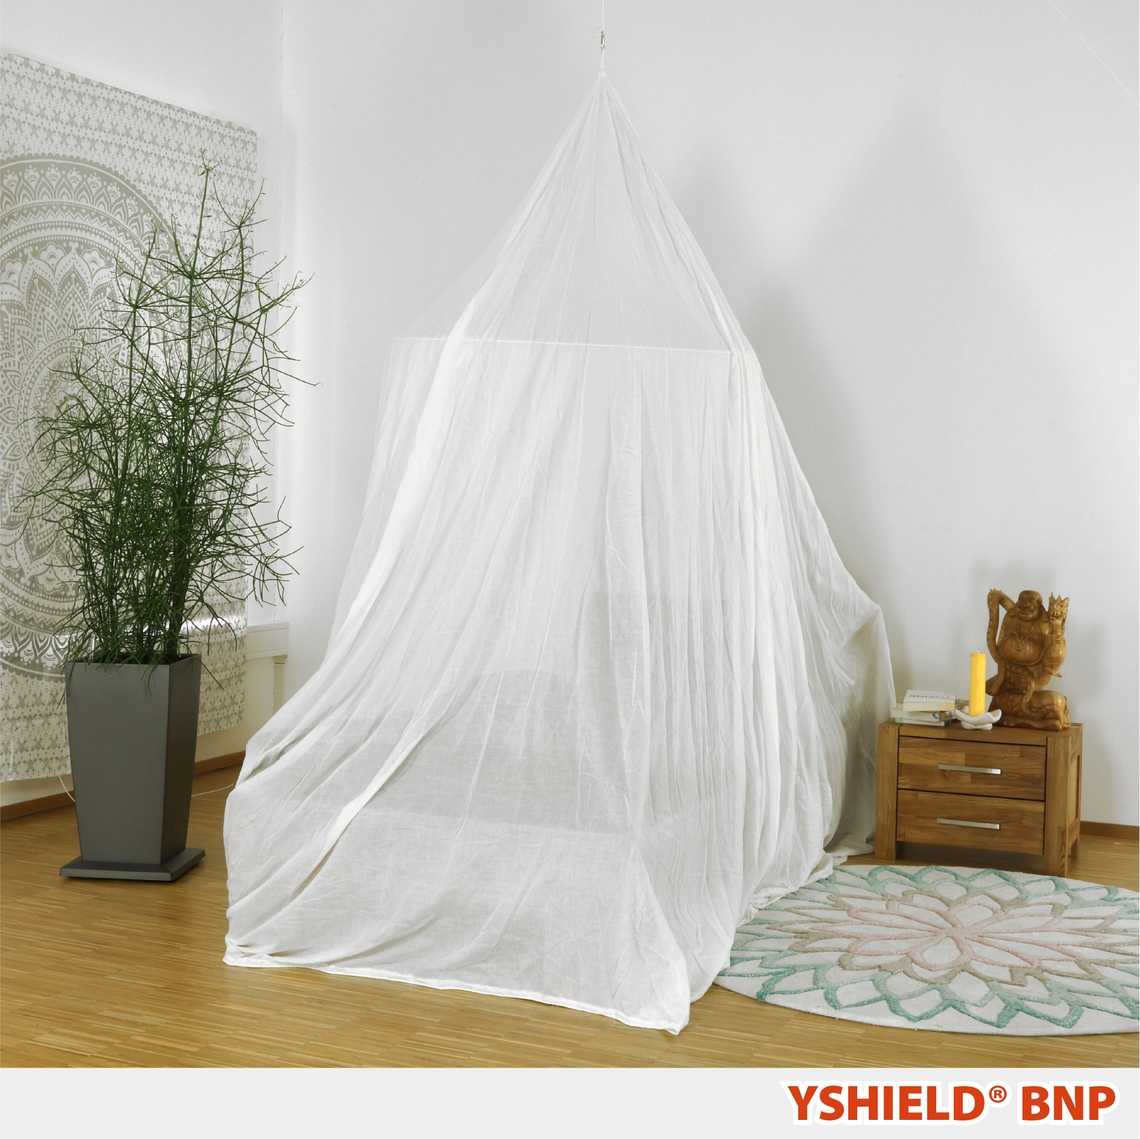 YSHIELD® BNP | Shielding canopy | Pyramidal | NATURELL